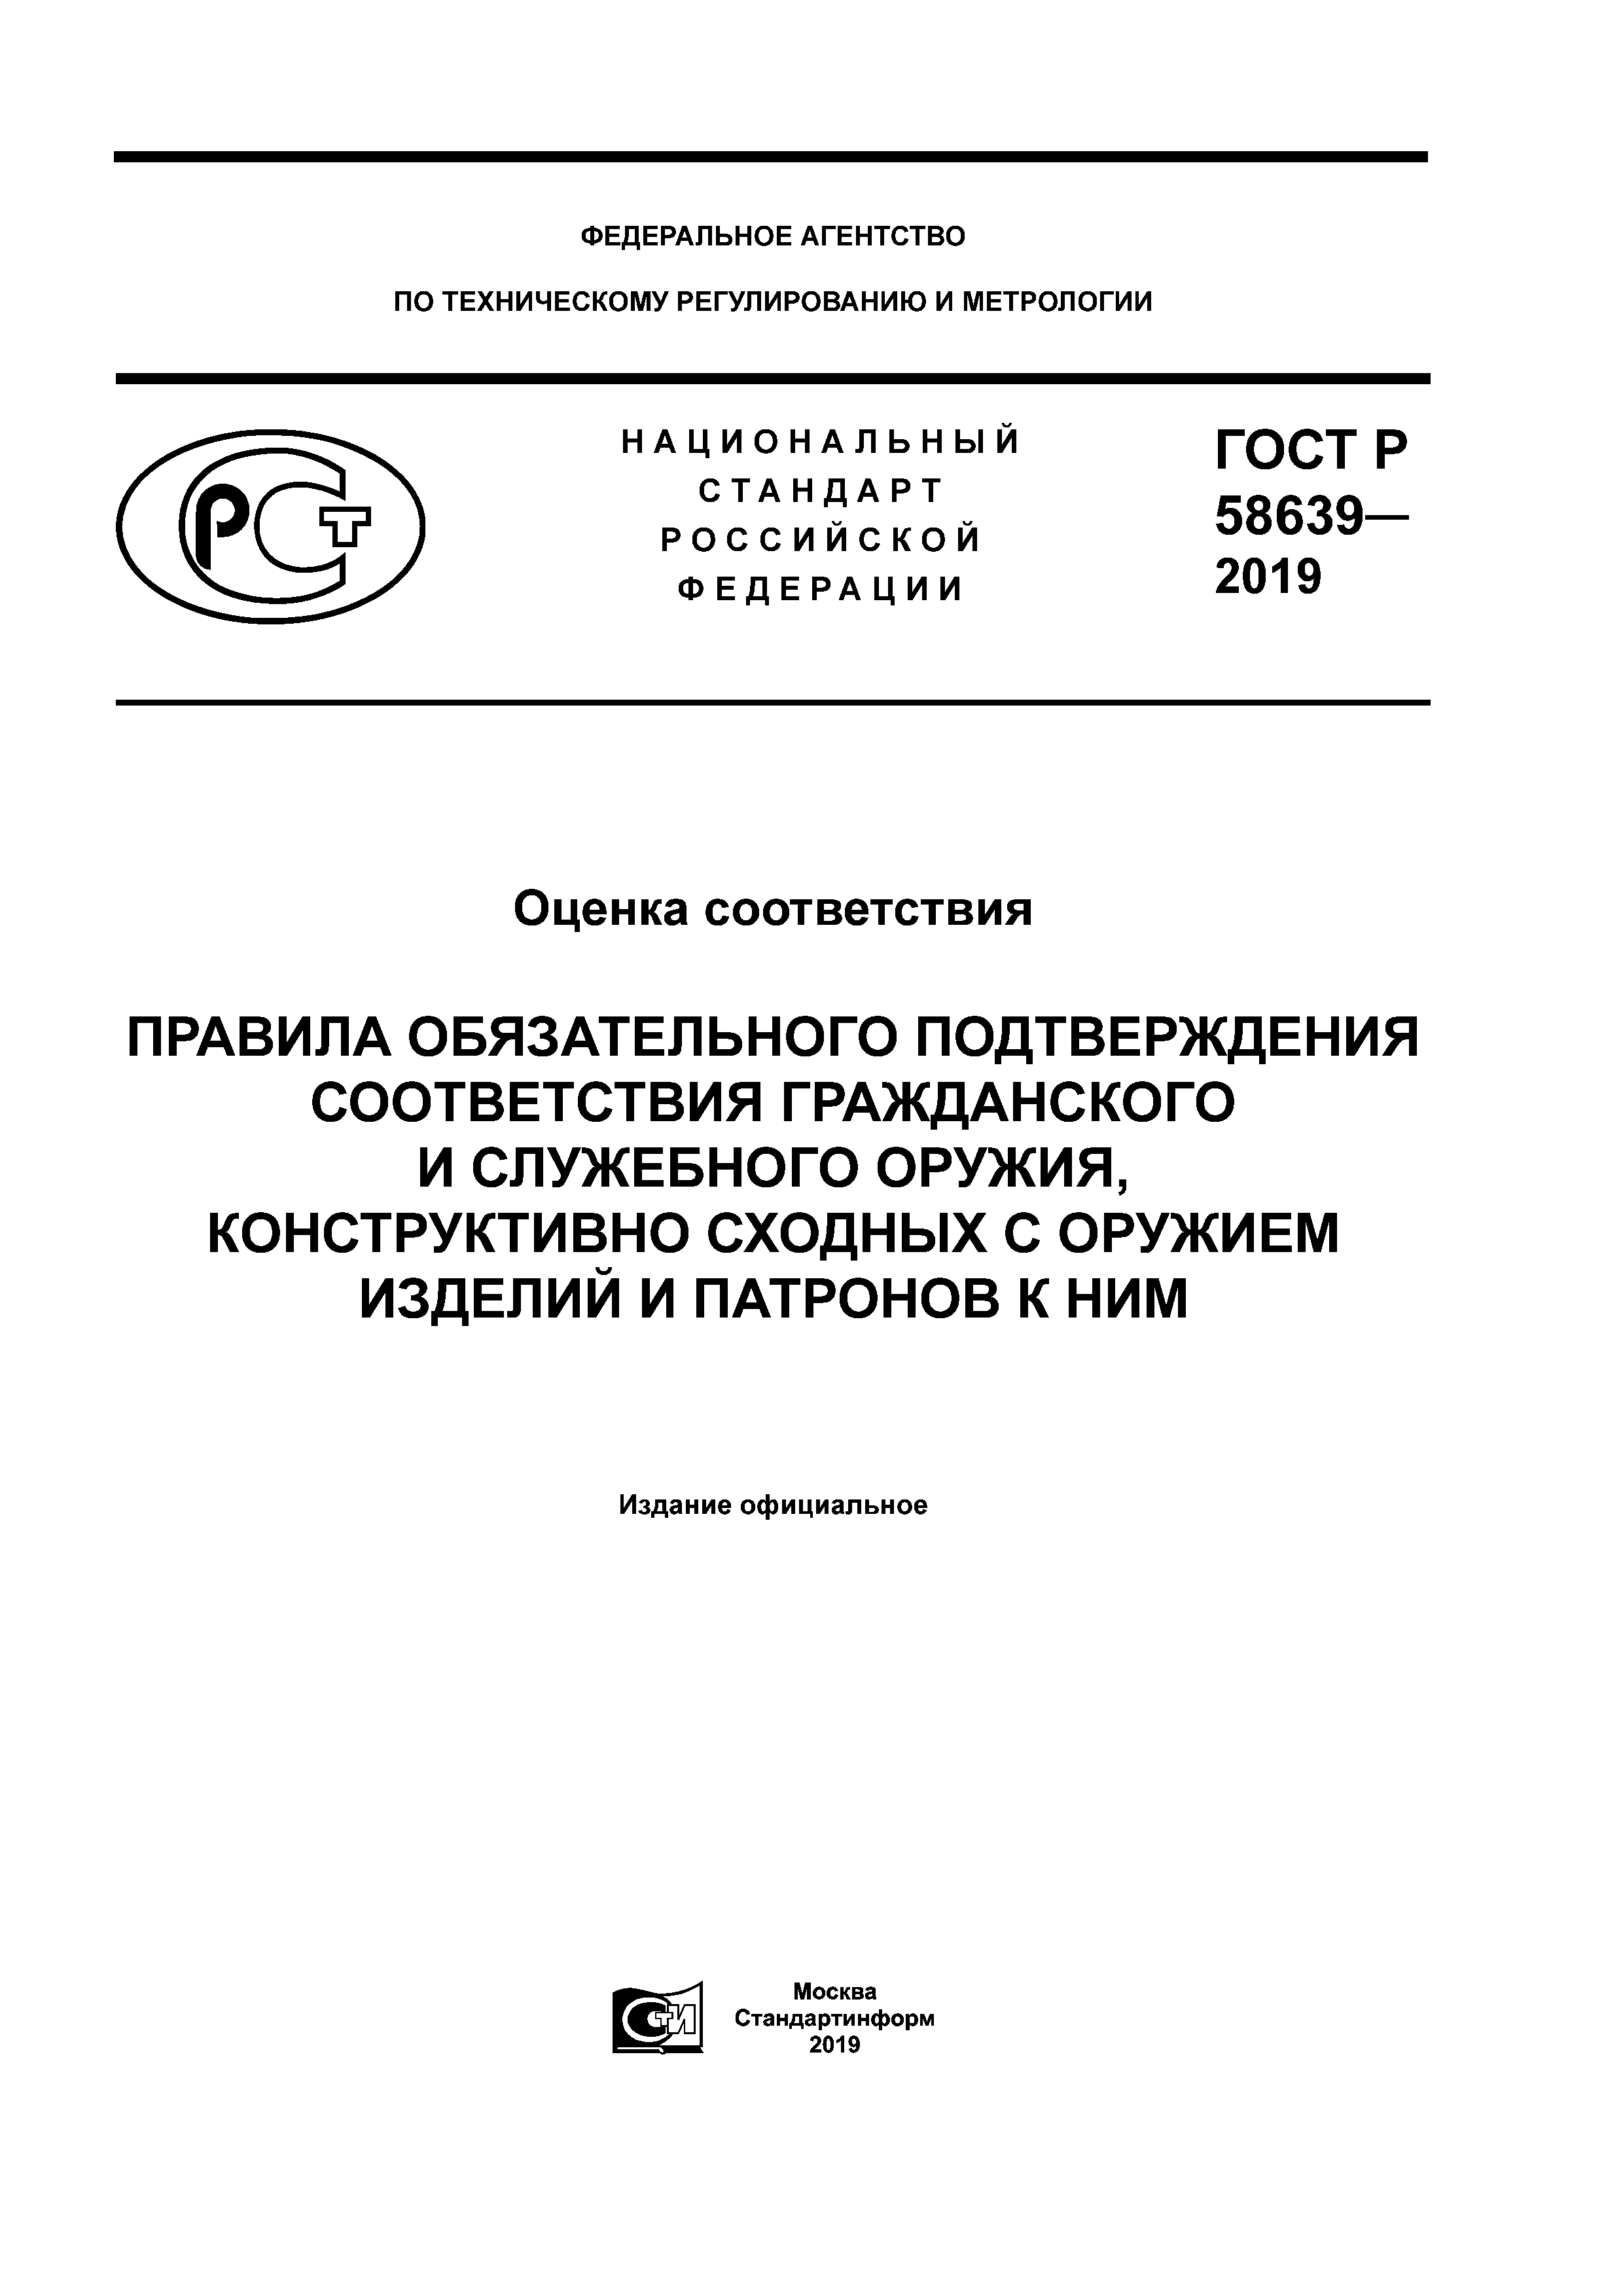 ГОСТ Р 58639-2019